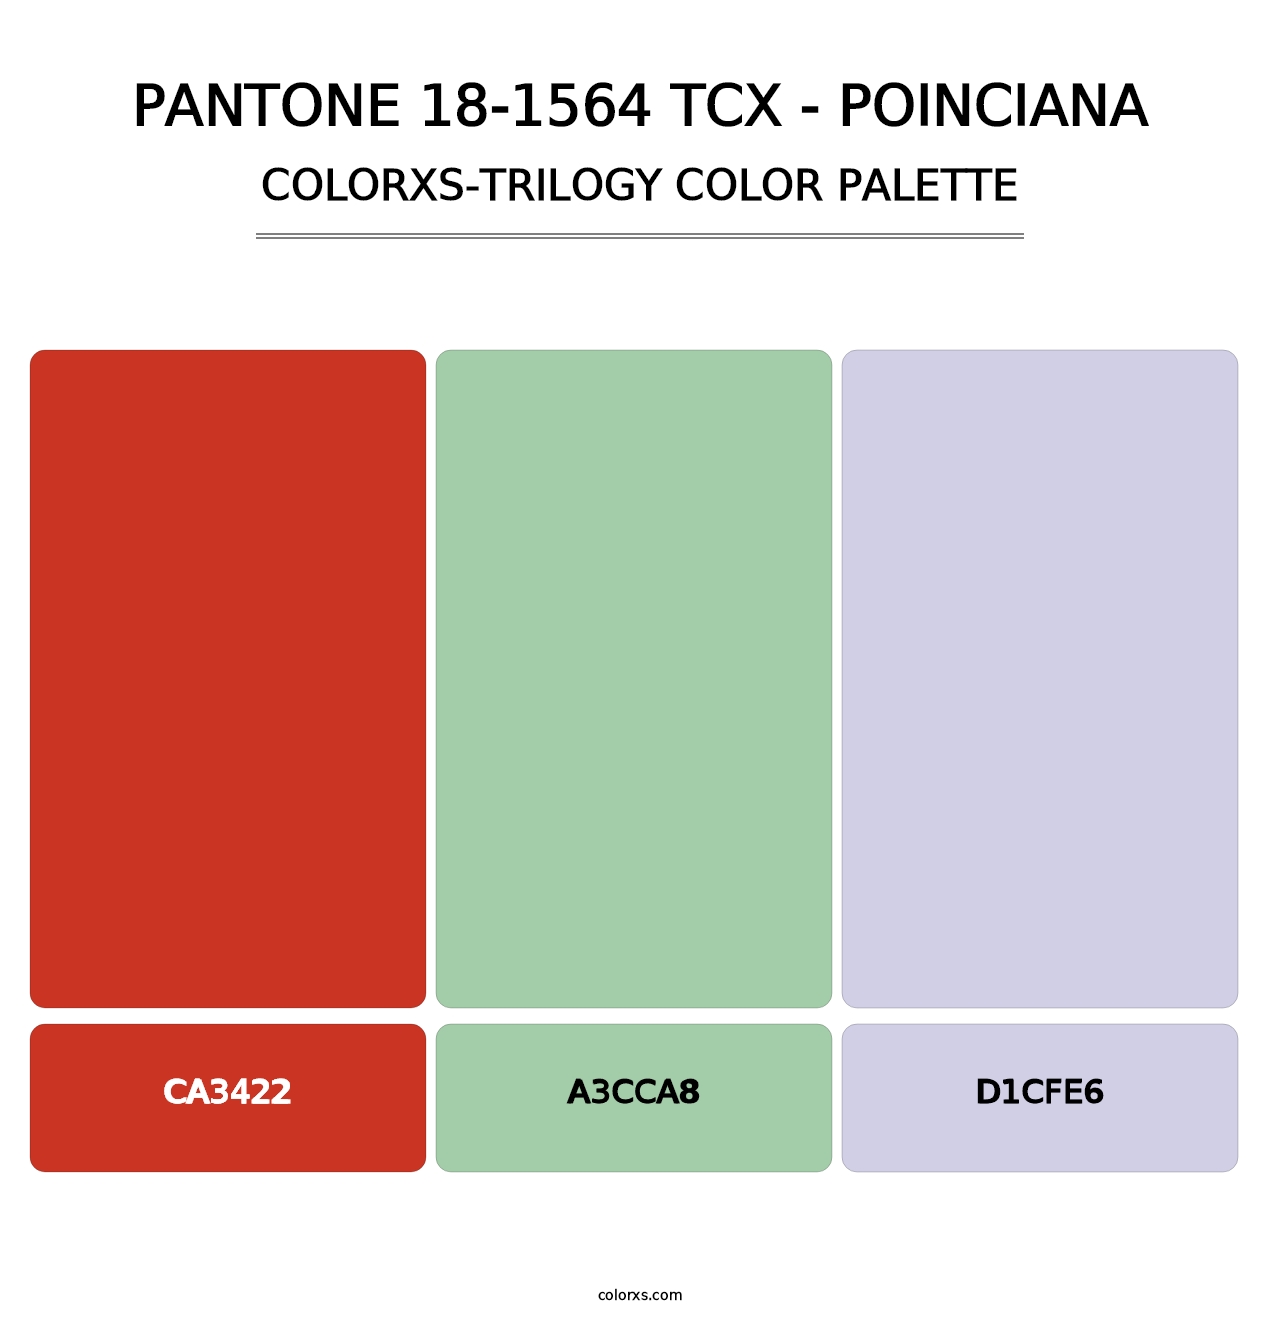 PANTONE 18-1564 TCX - Poinciana - Colorxs Trilogy Palette